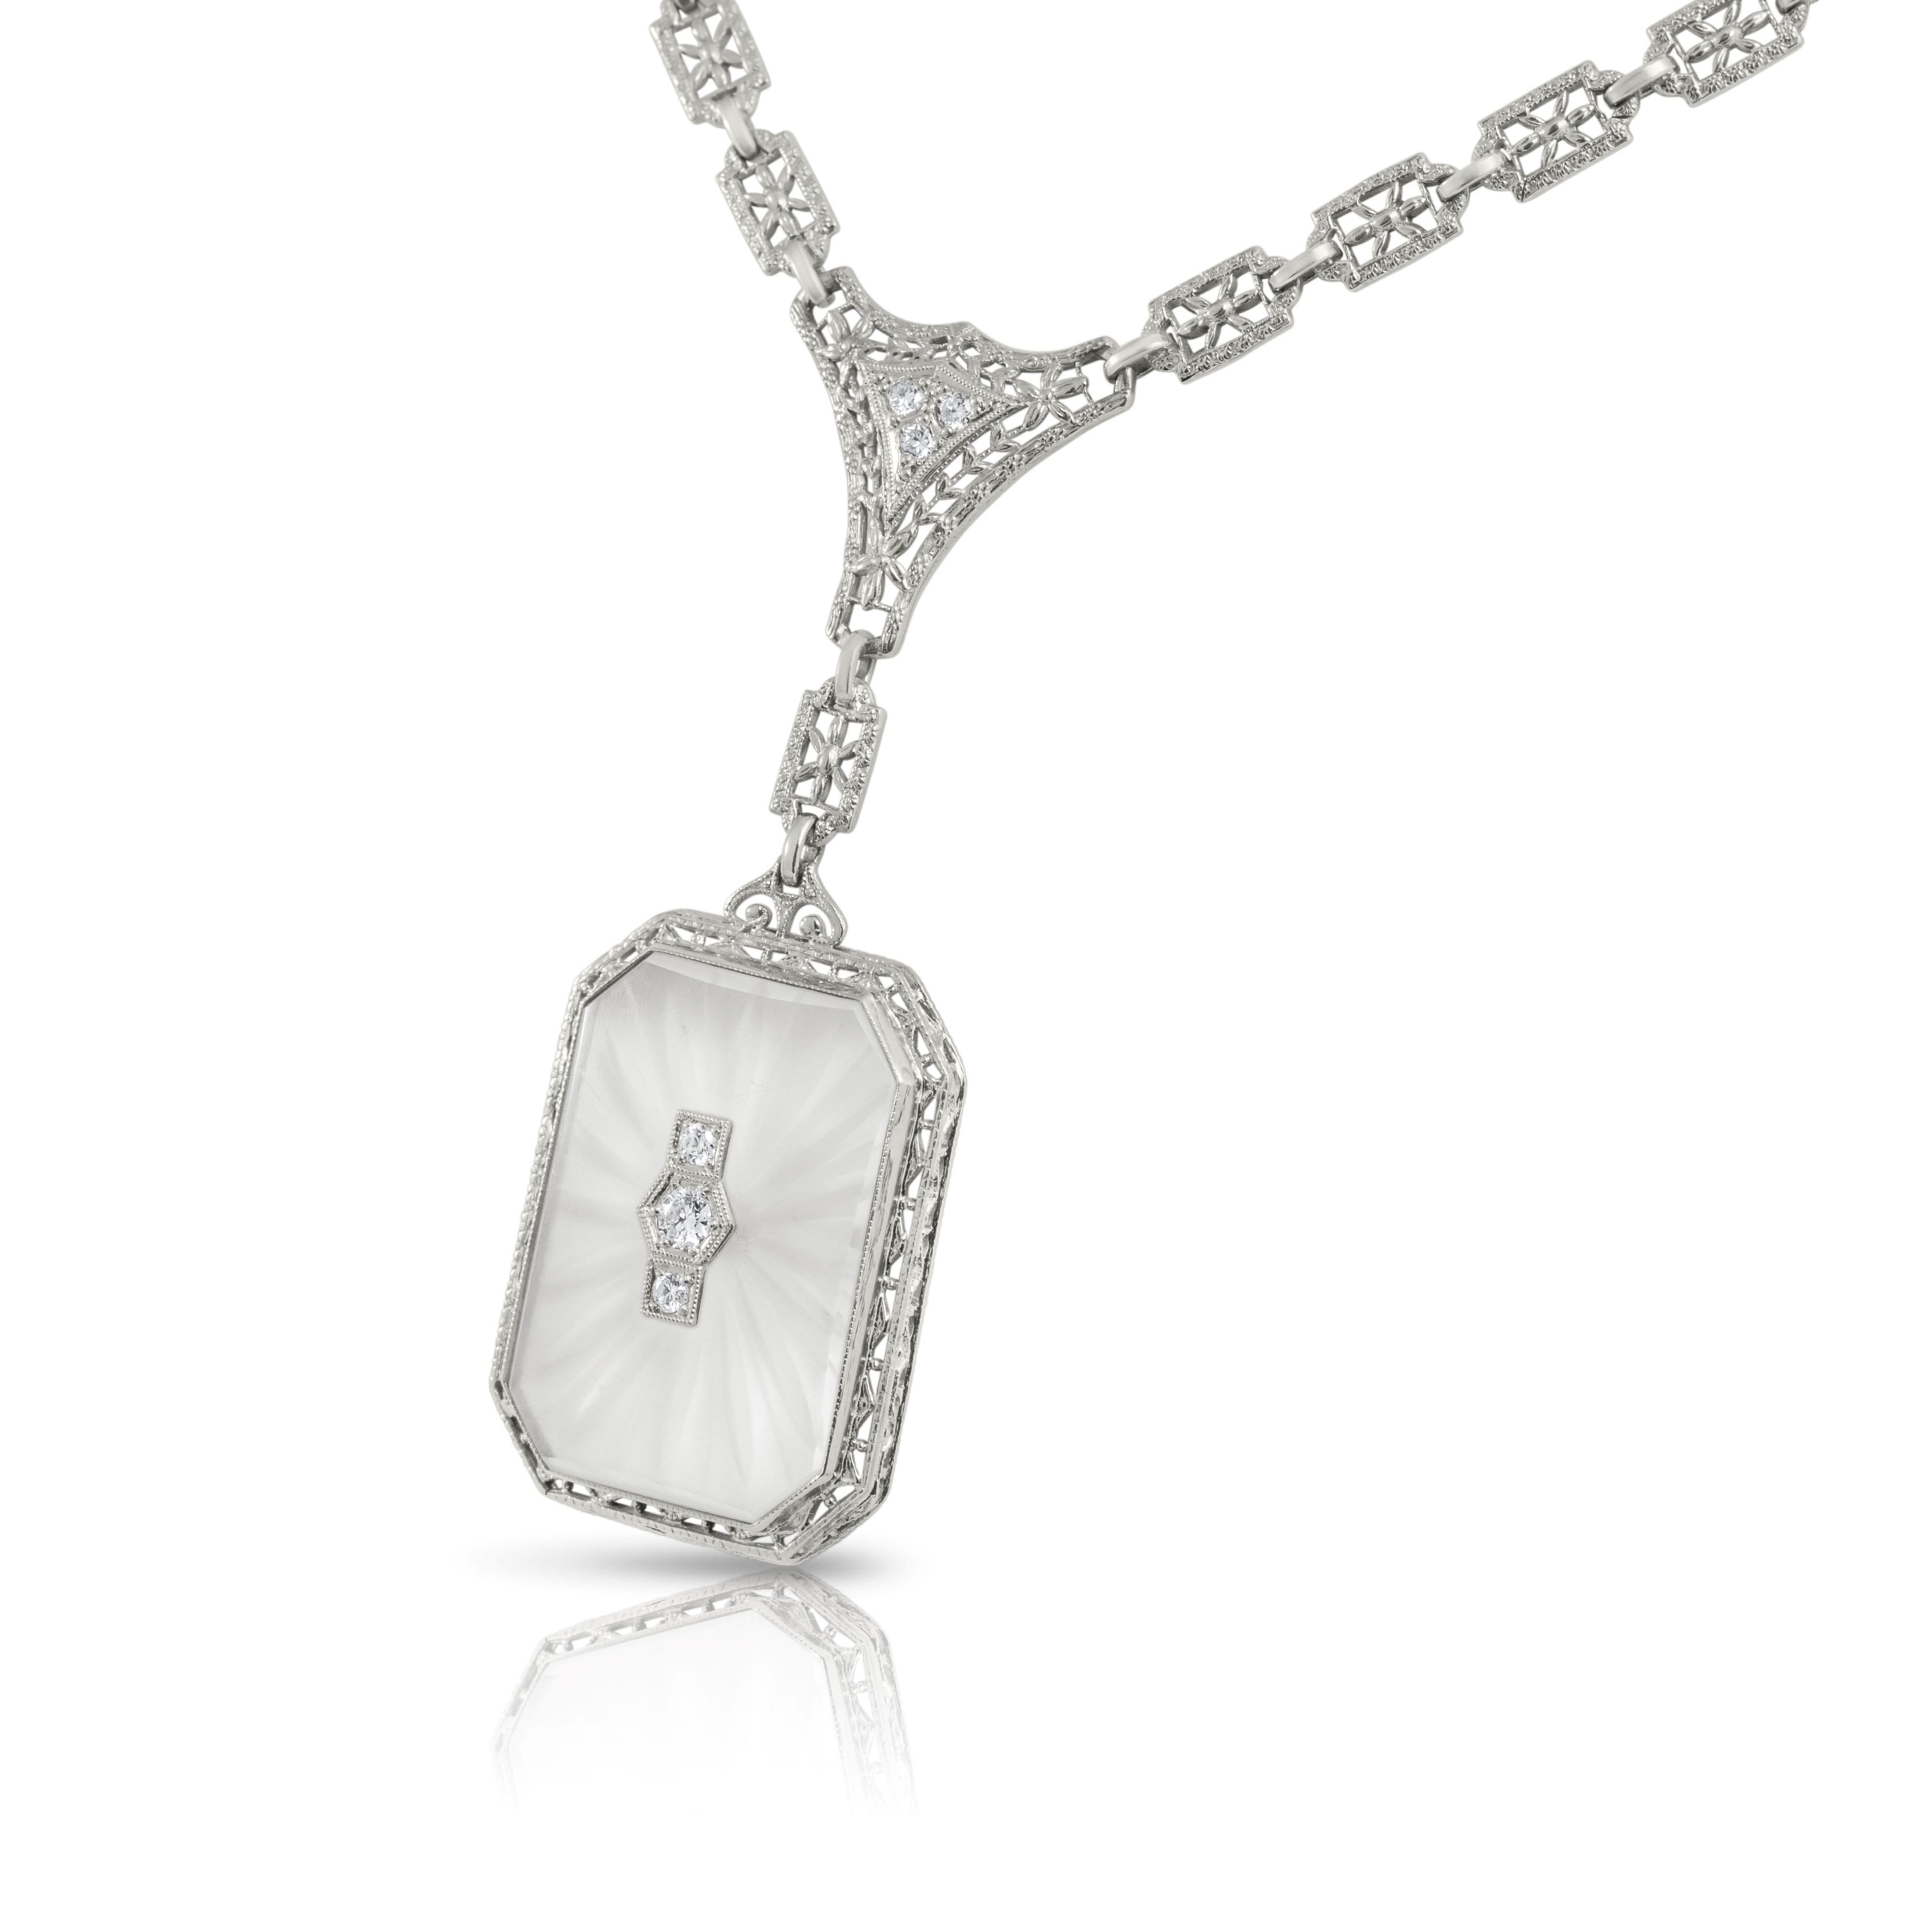 Art Deco clear quartz necklace in platinum and diamond accents.